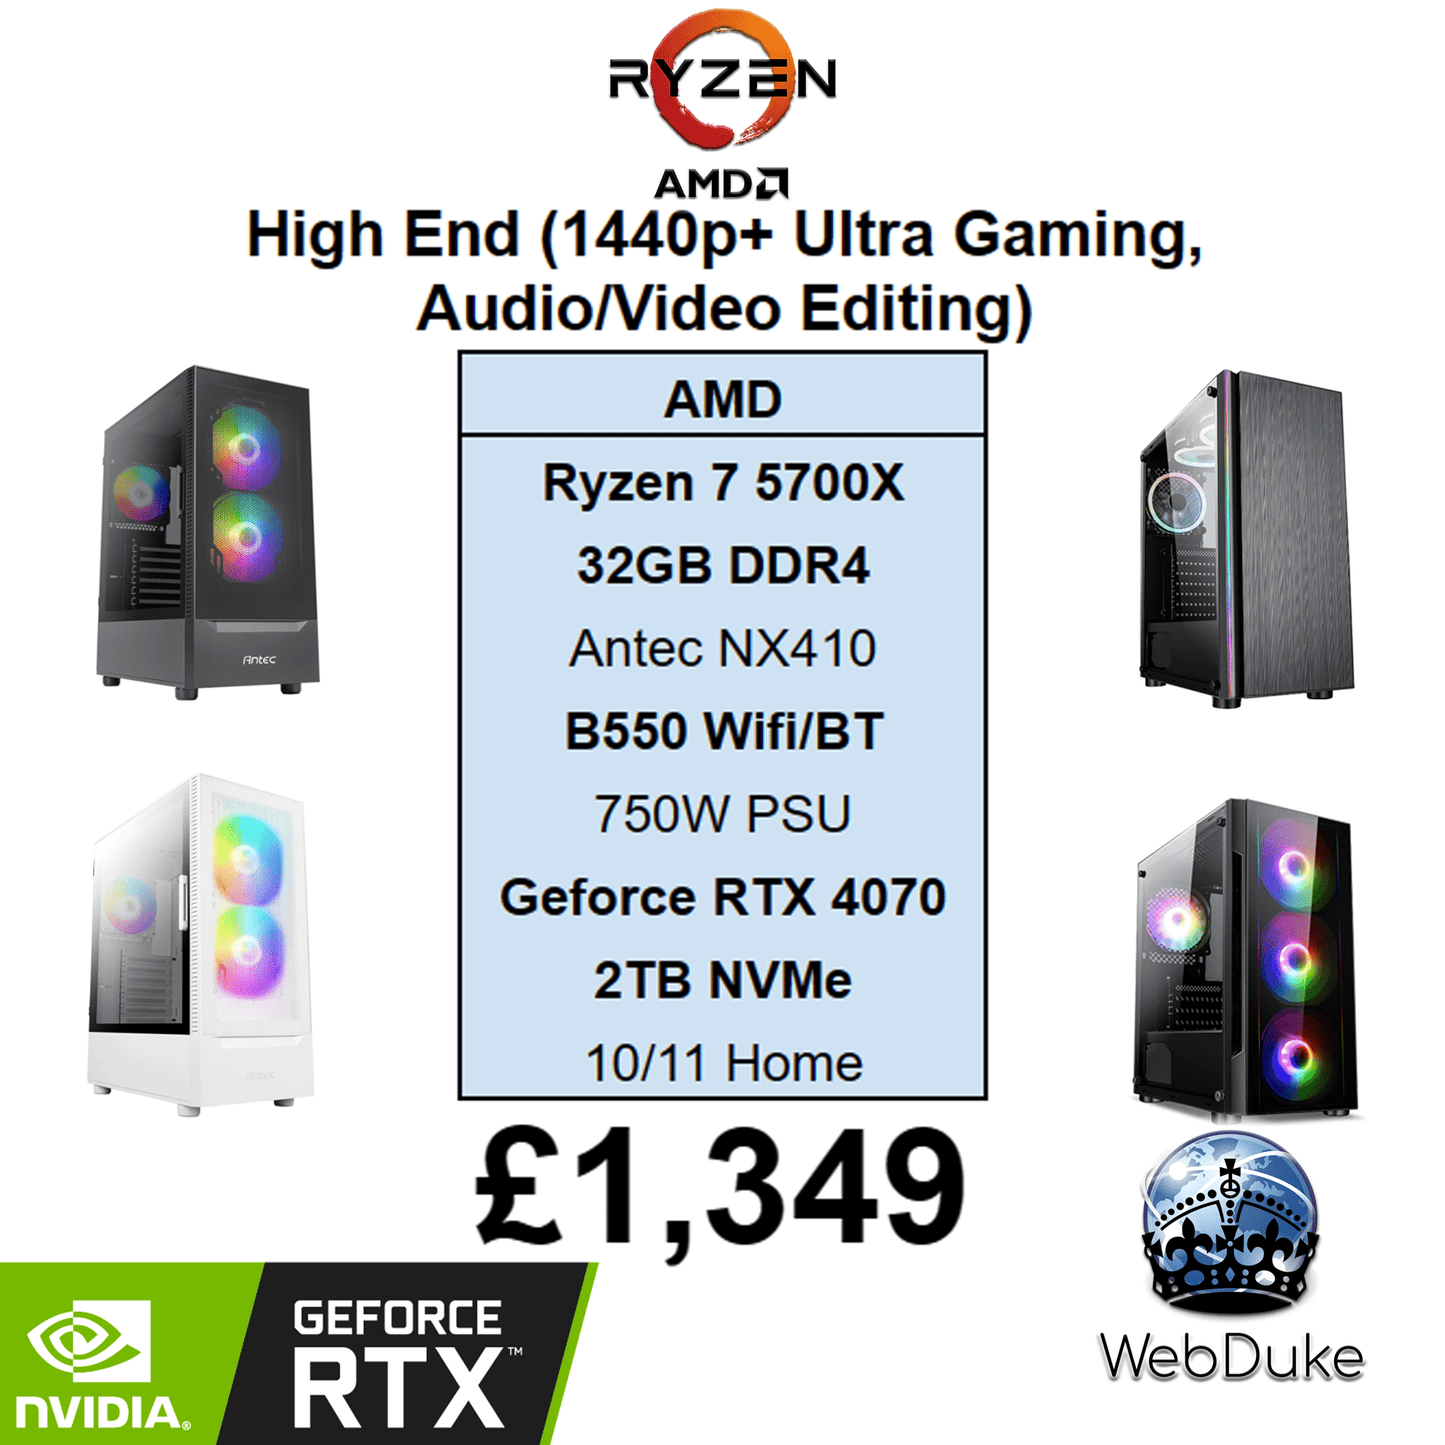 High End Gaming PC - AMD Ryzen 5700X - WebDuke Computers